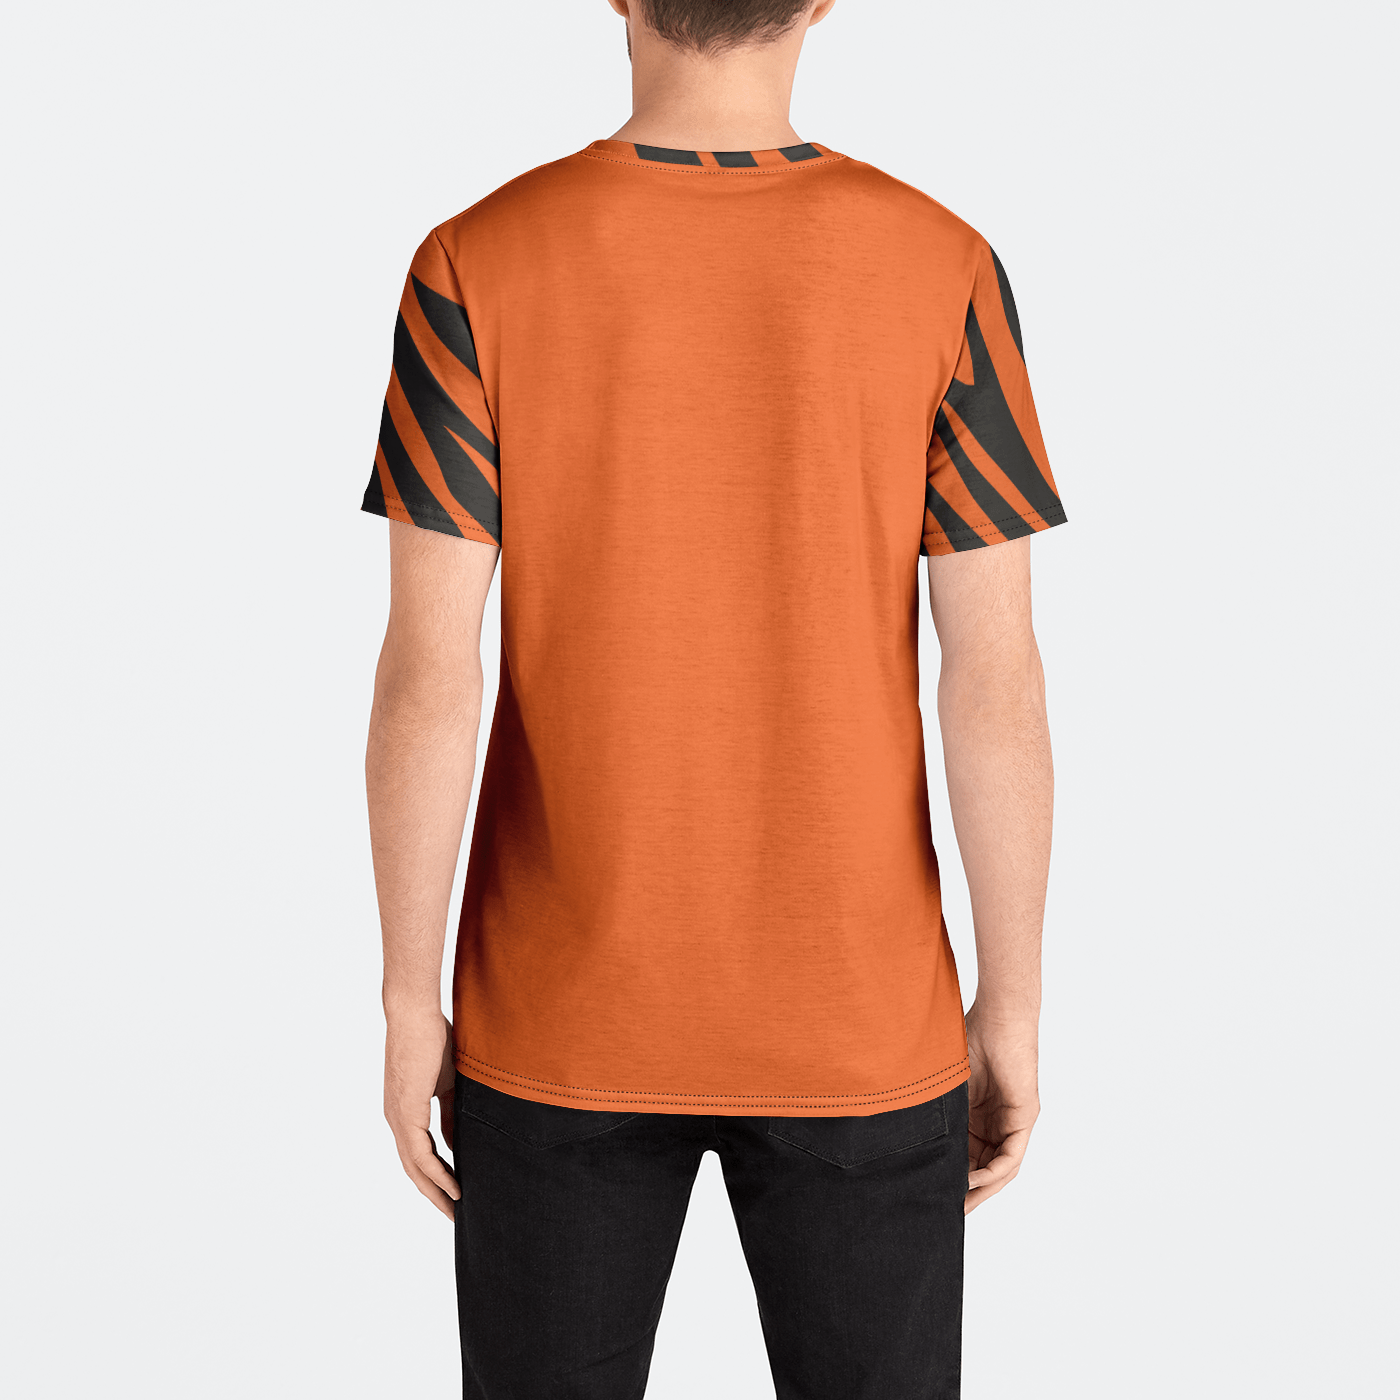 Monroe Bearcats LC Adult Sublimated Athletic T-Shirt (Men's) Signature Lacrosse